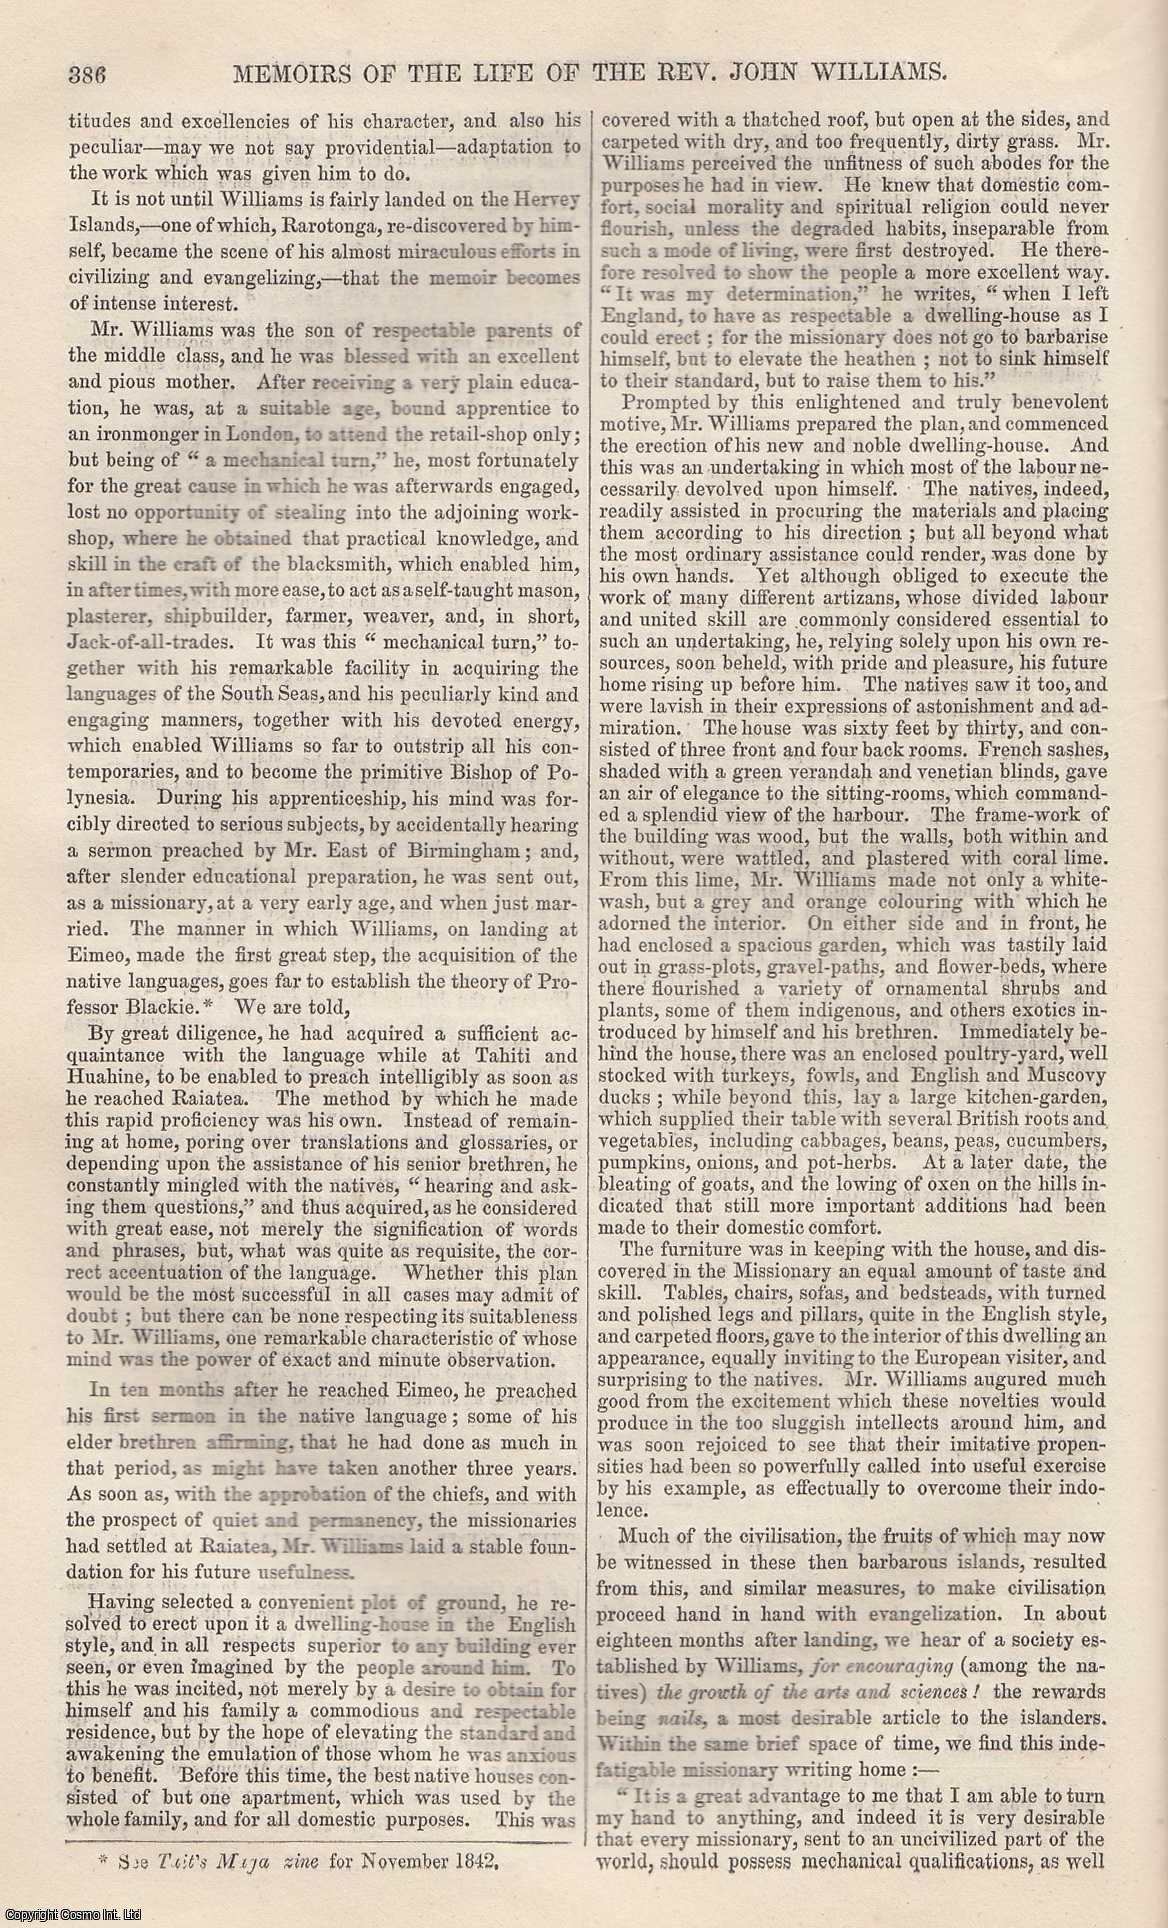 Johnstone, Christian - Memoirs of The Life of The Rev. John Williams. An original article from Tait's Edinburgh Magazine, 1843.